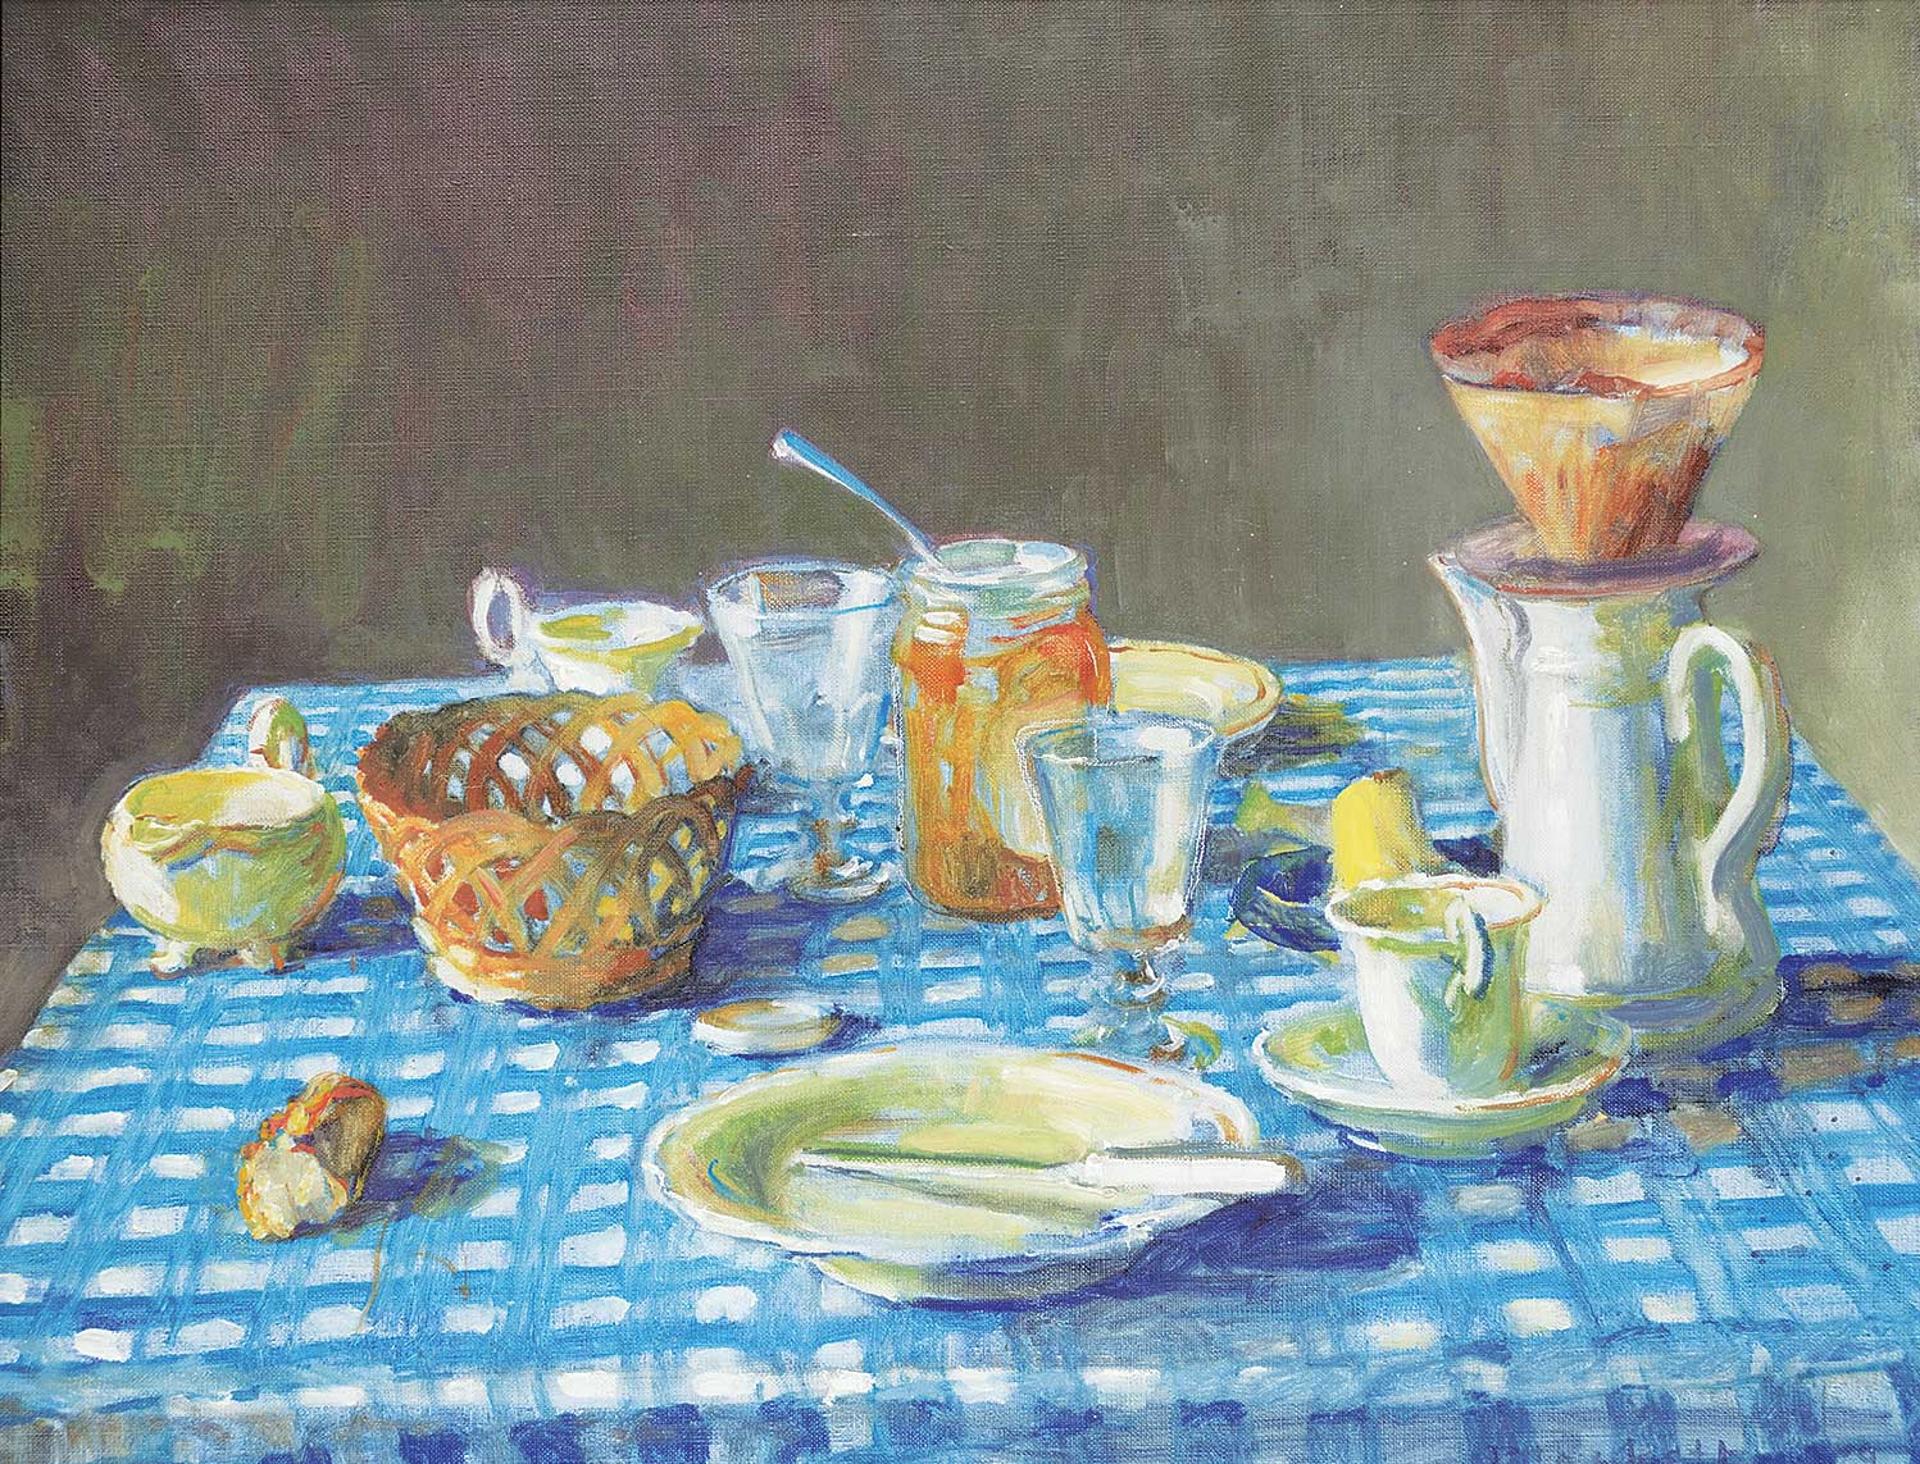 Joseph (Joe) Francis Plaskett (1918-2014) - Untitled - Breakfast Still Life